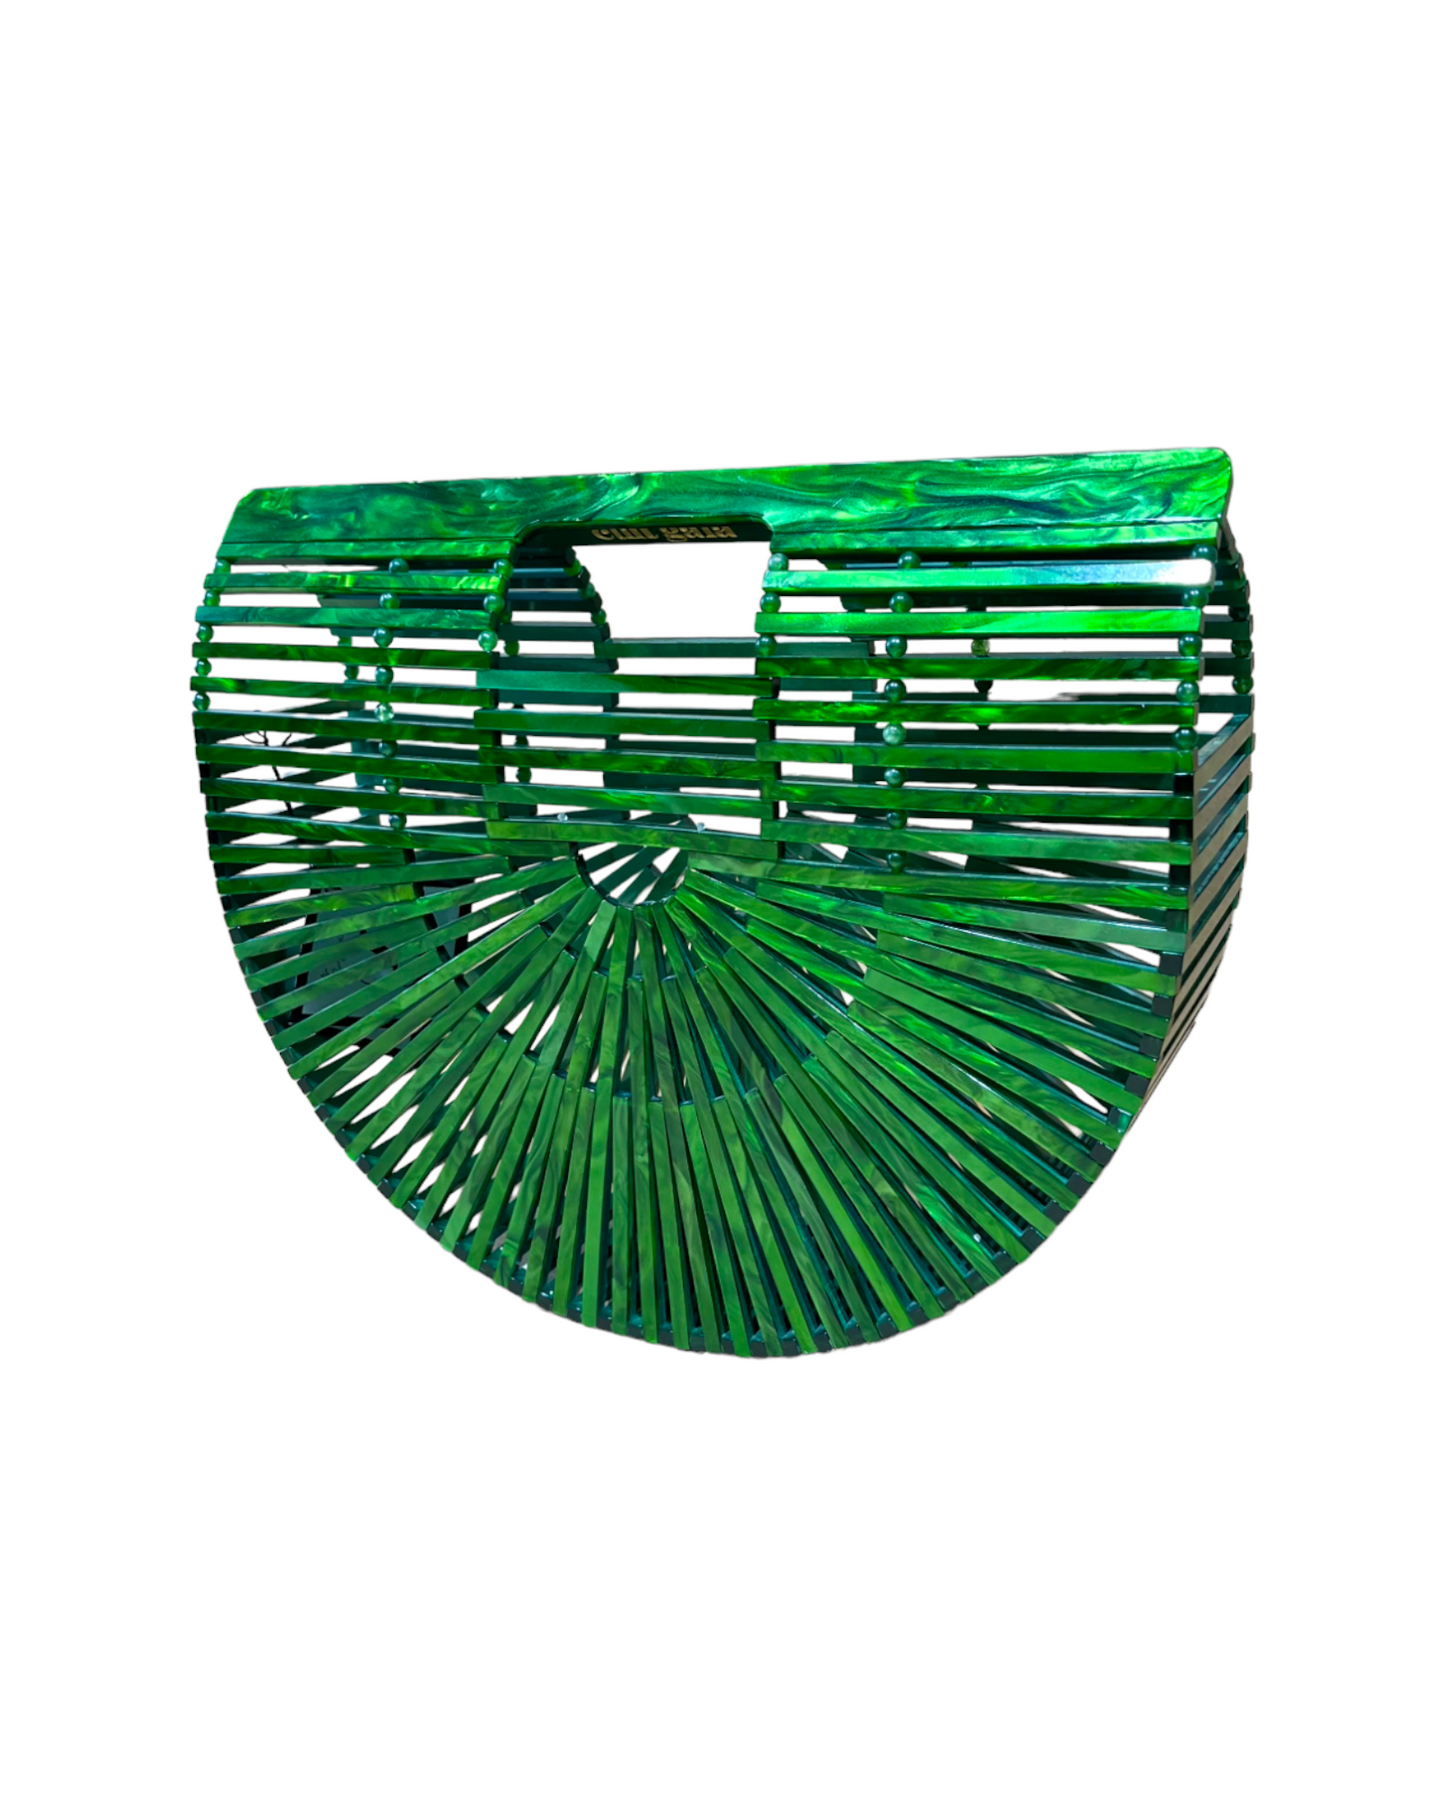 Cult Gaia Acrylic Ark Green Bag